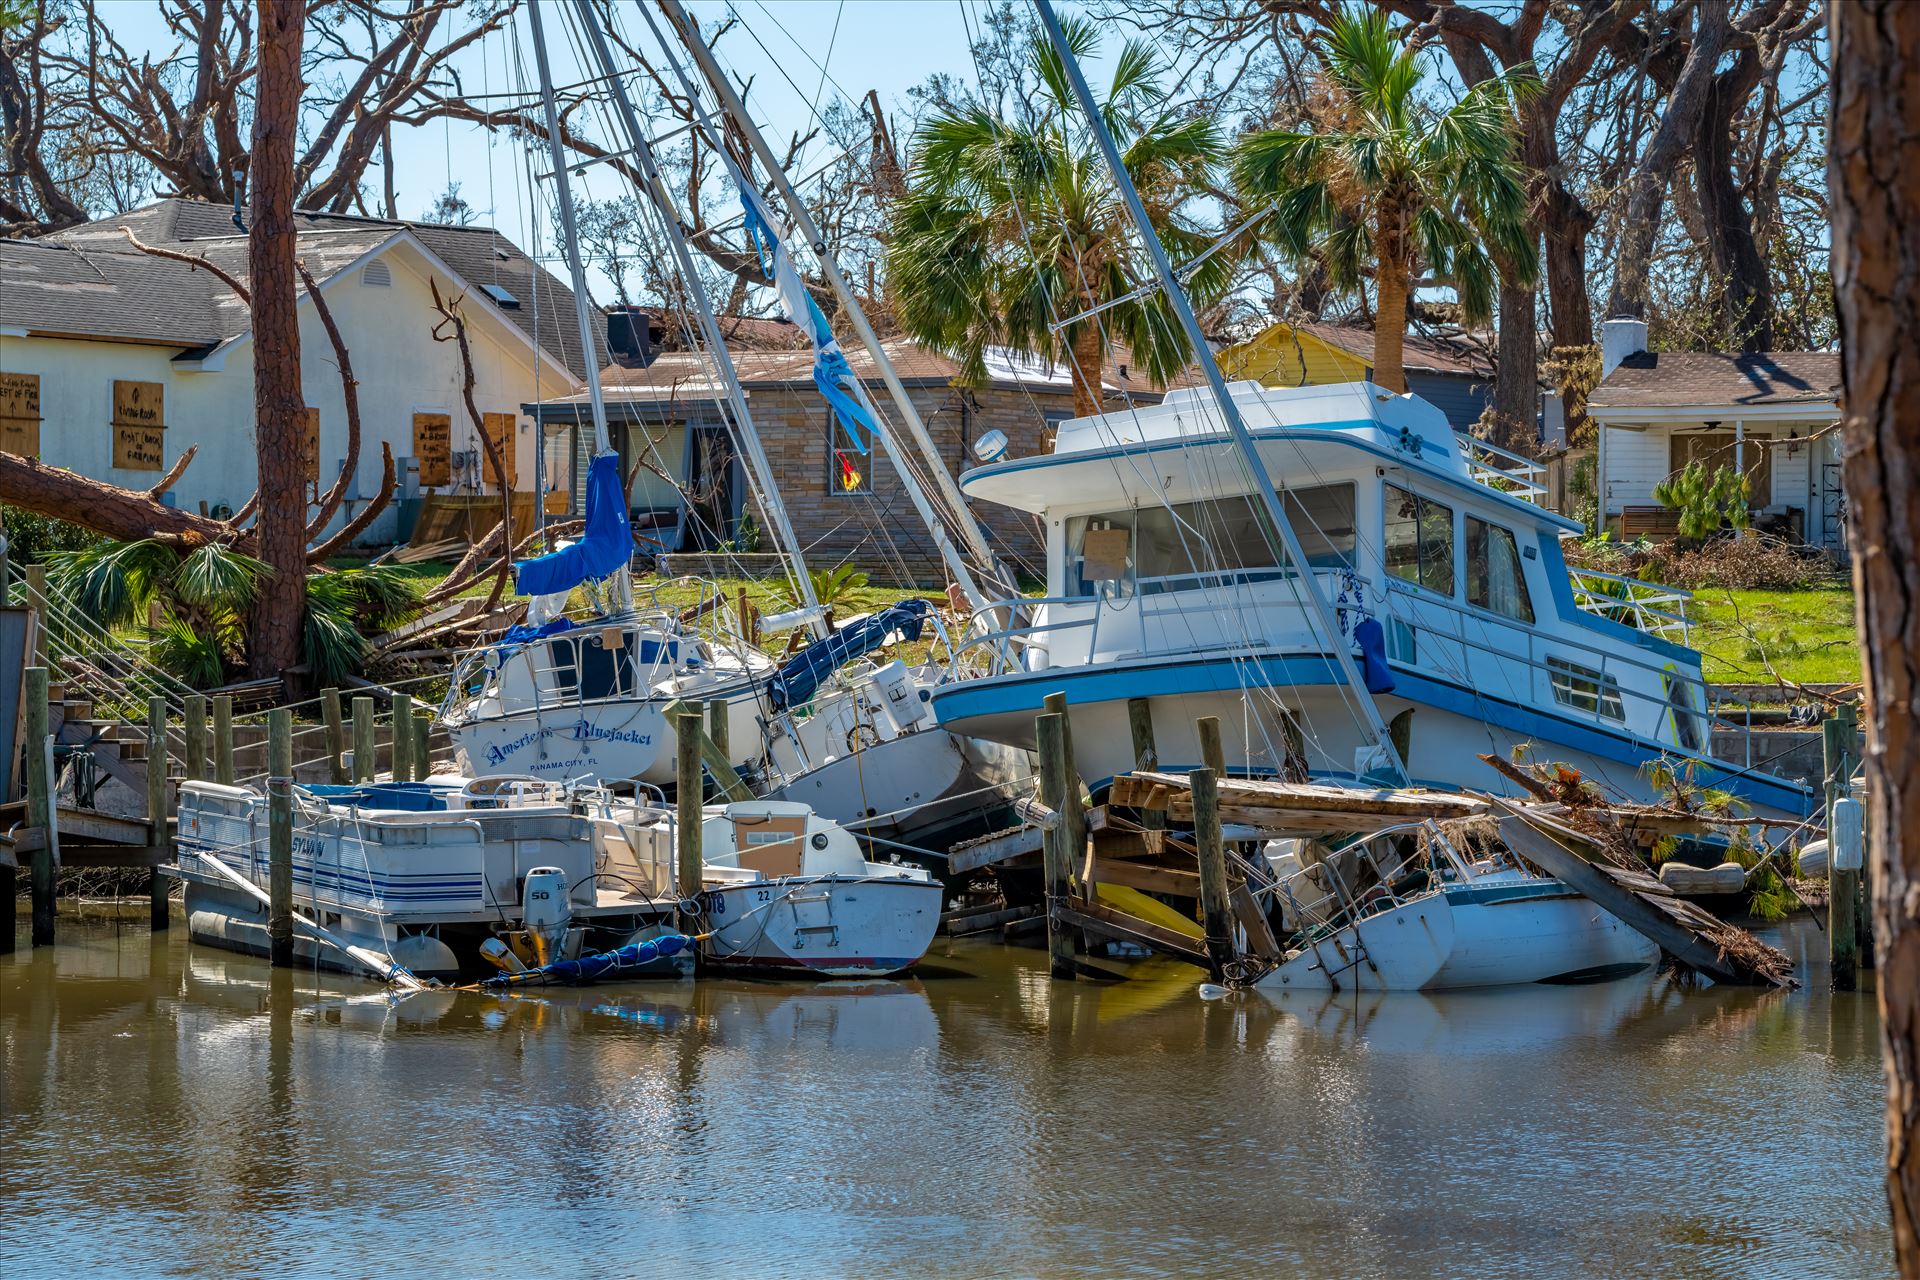 Hurricane Michael - Massalina bayou, Panama City, Florida by Terry Kelly Photography